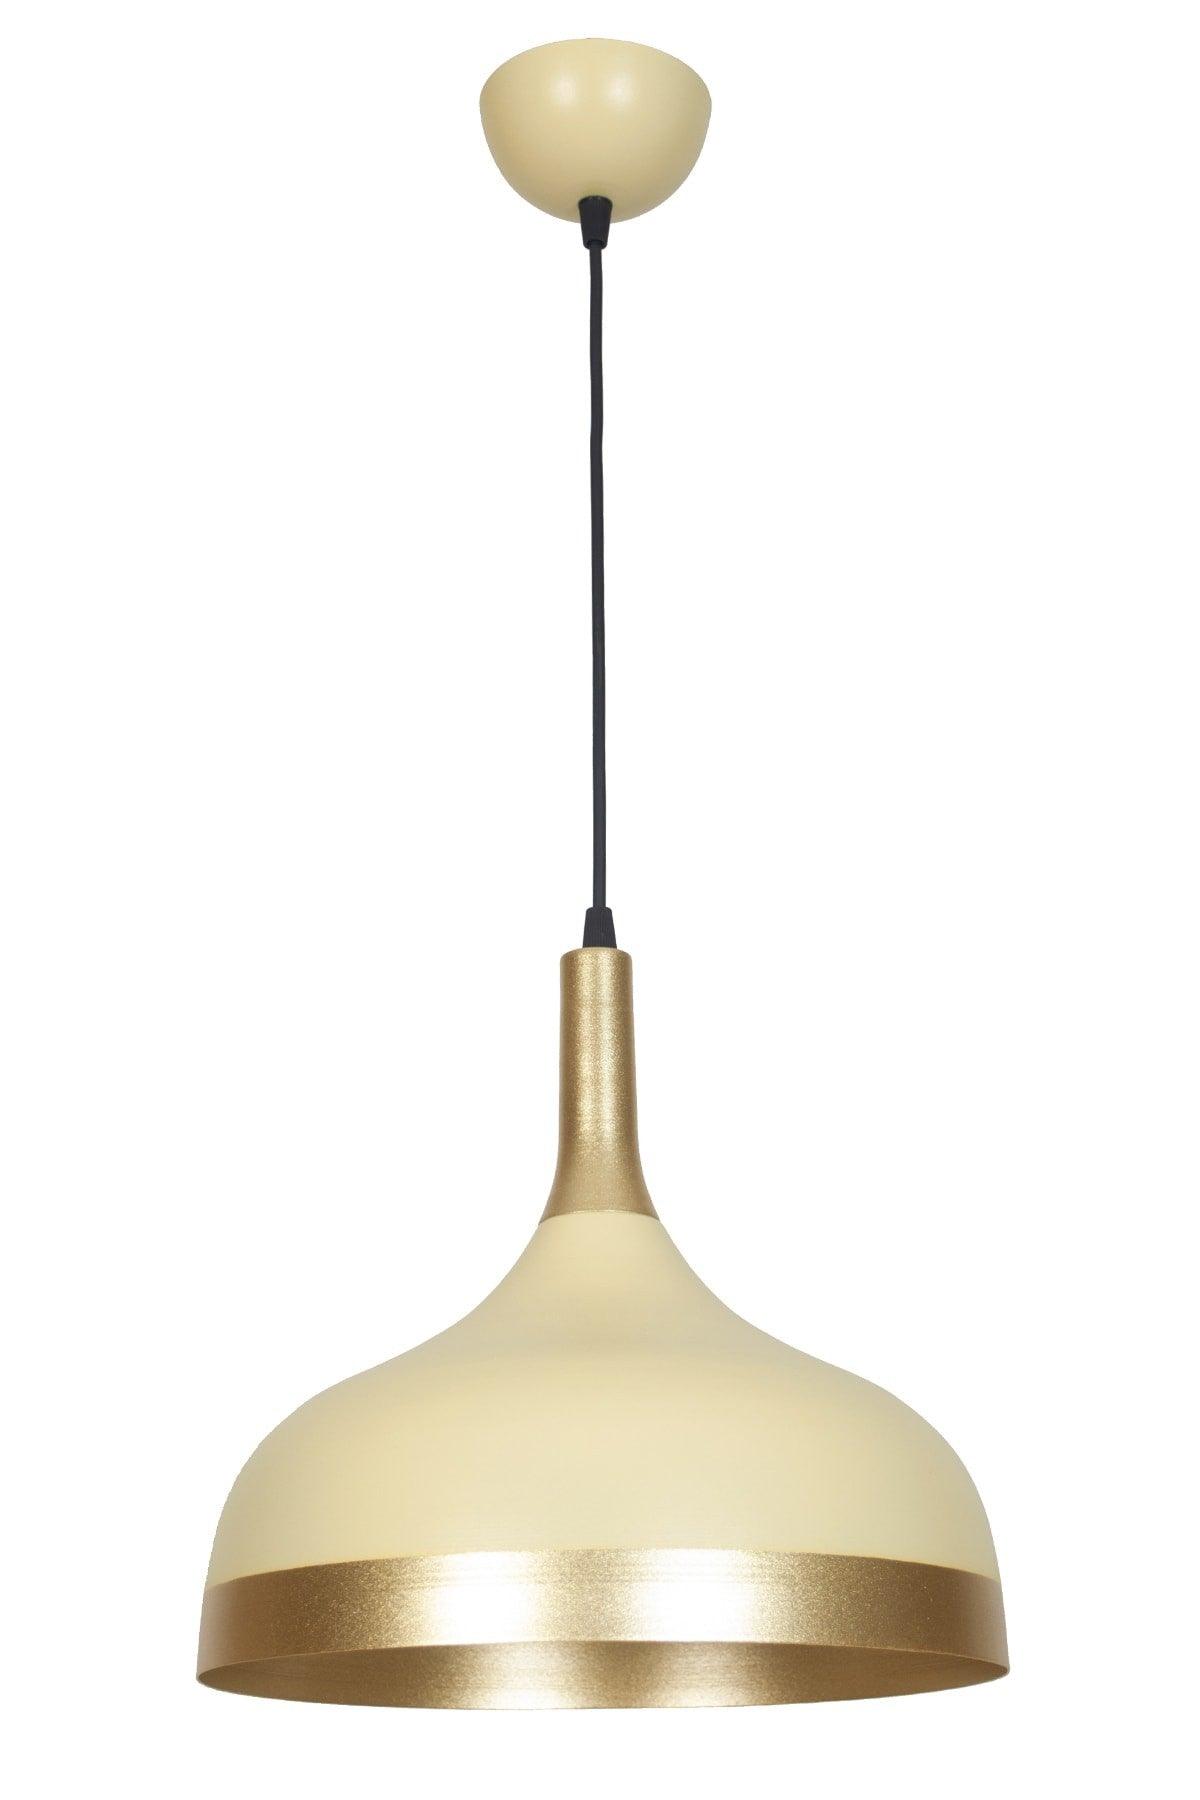 Cosmos Special Design Sport Modern Cream Color Gold Detailed Metal Cafe-kitchen Single Pendant Lamp Chandelier - Swordslife